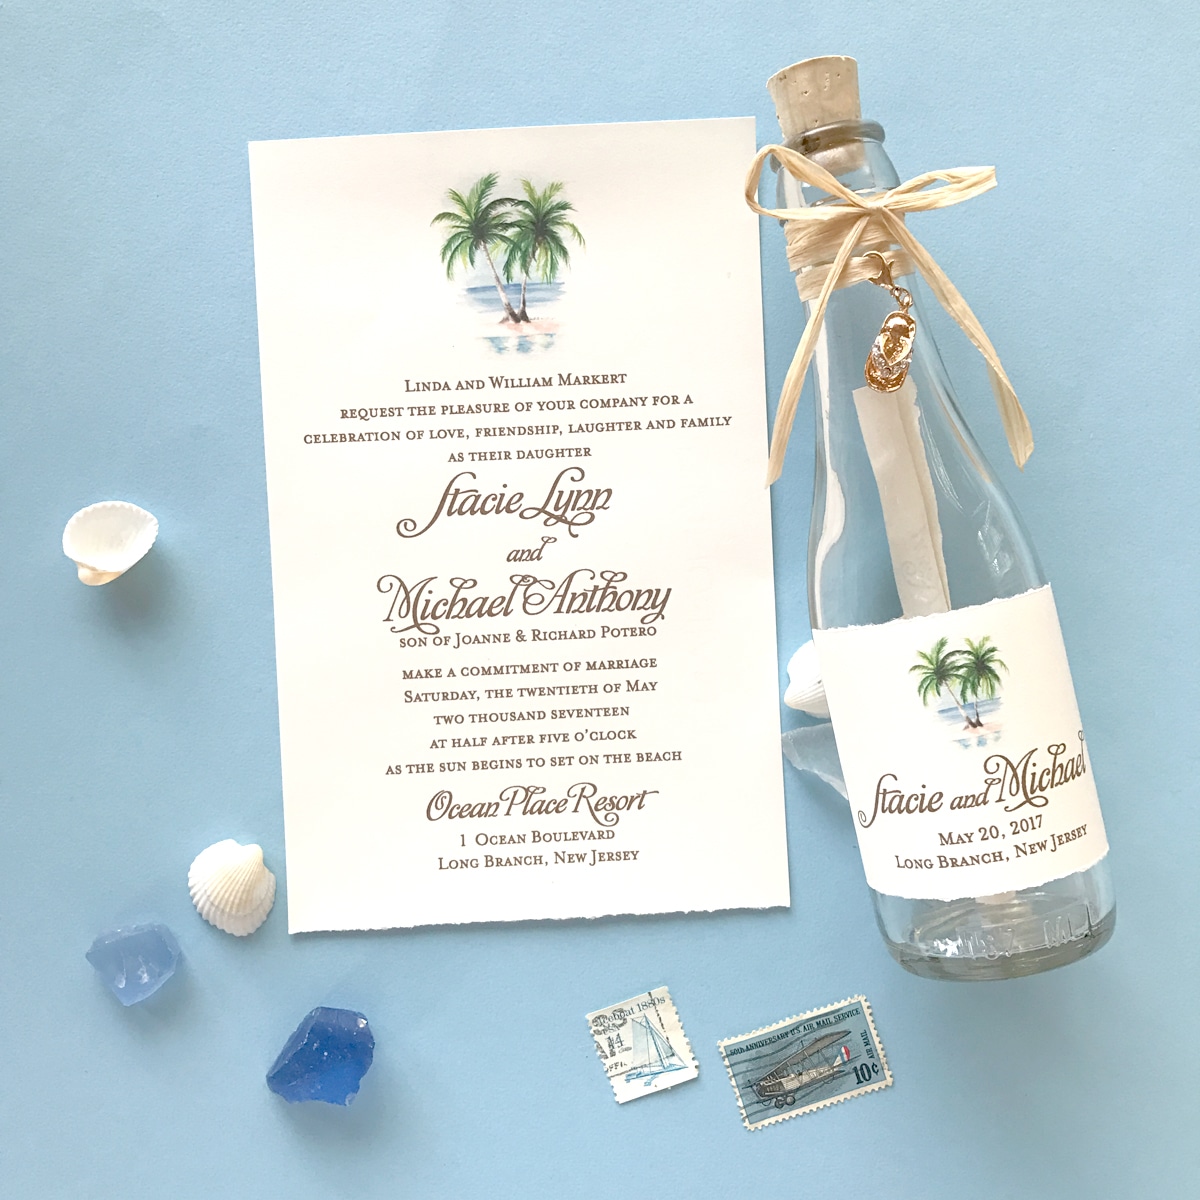 Custom beach wedding invitations in a bottle by artist Michelle Mospens. | Mospens Studio